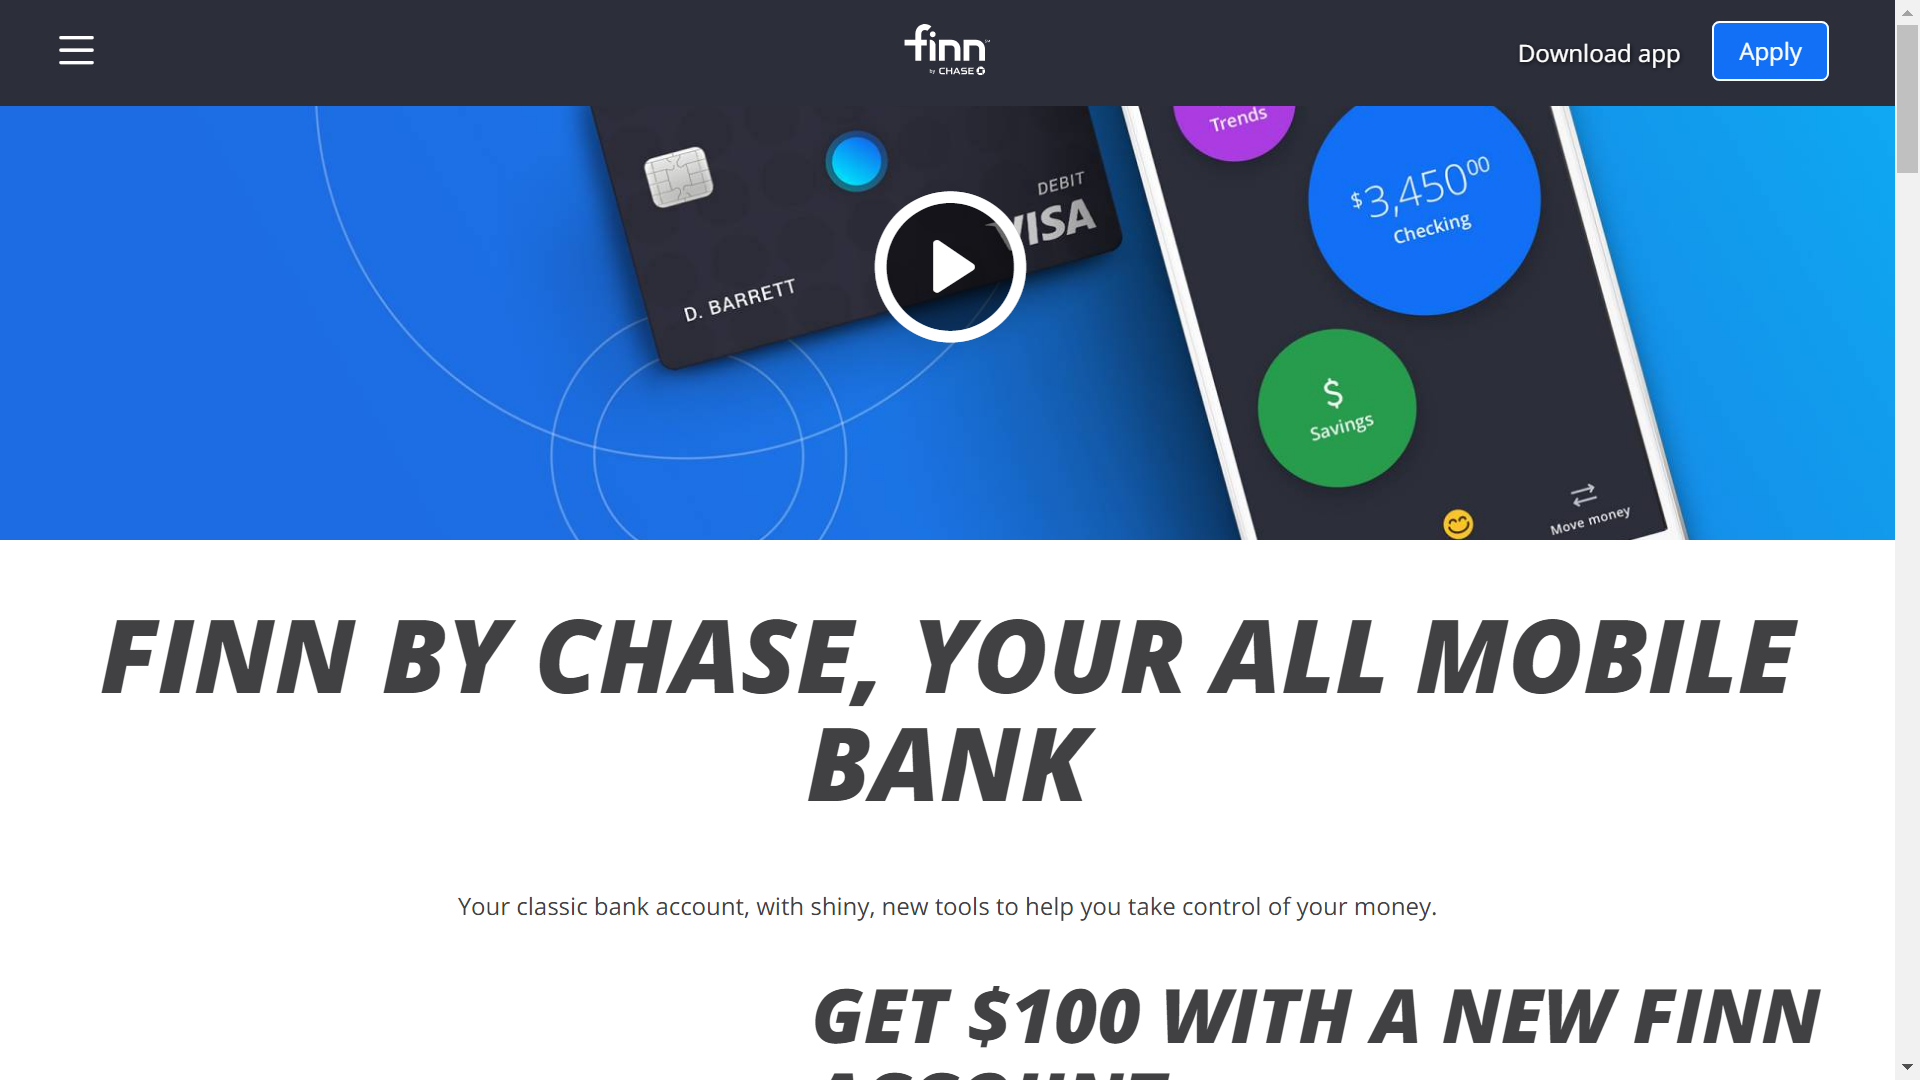 Finn by Chase: a bank for millennials?